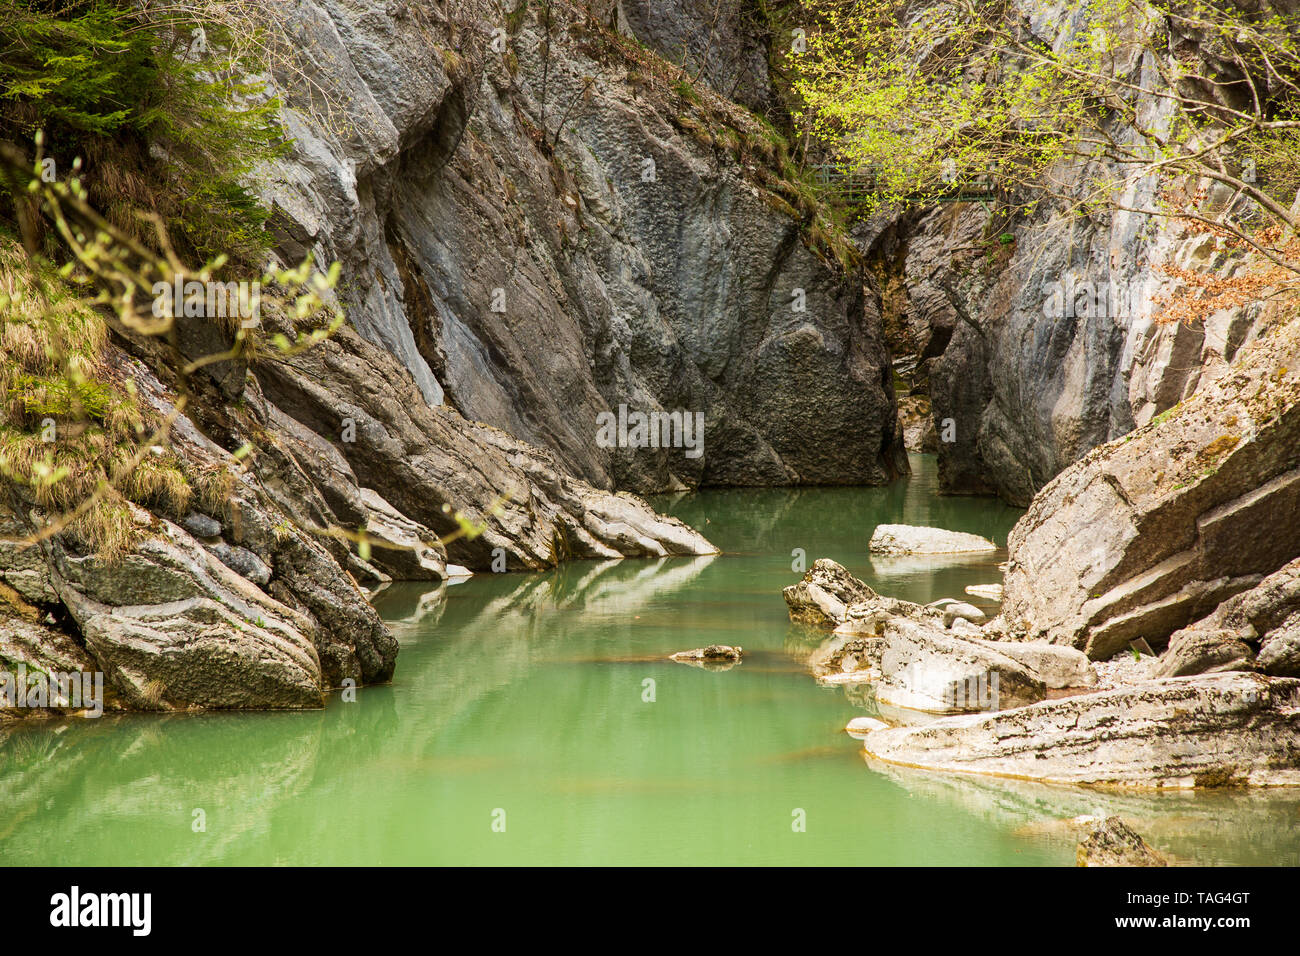 https://c8.alamy.com/comp/TAG4GT/gorges-de-la-jogne-river-canyon-in-broc-switzerland-TAG4GT.jpg